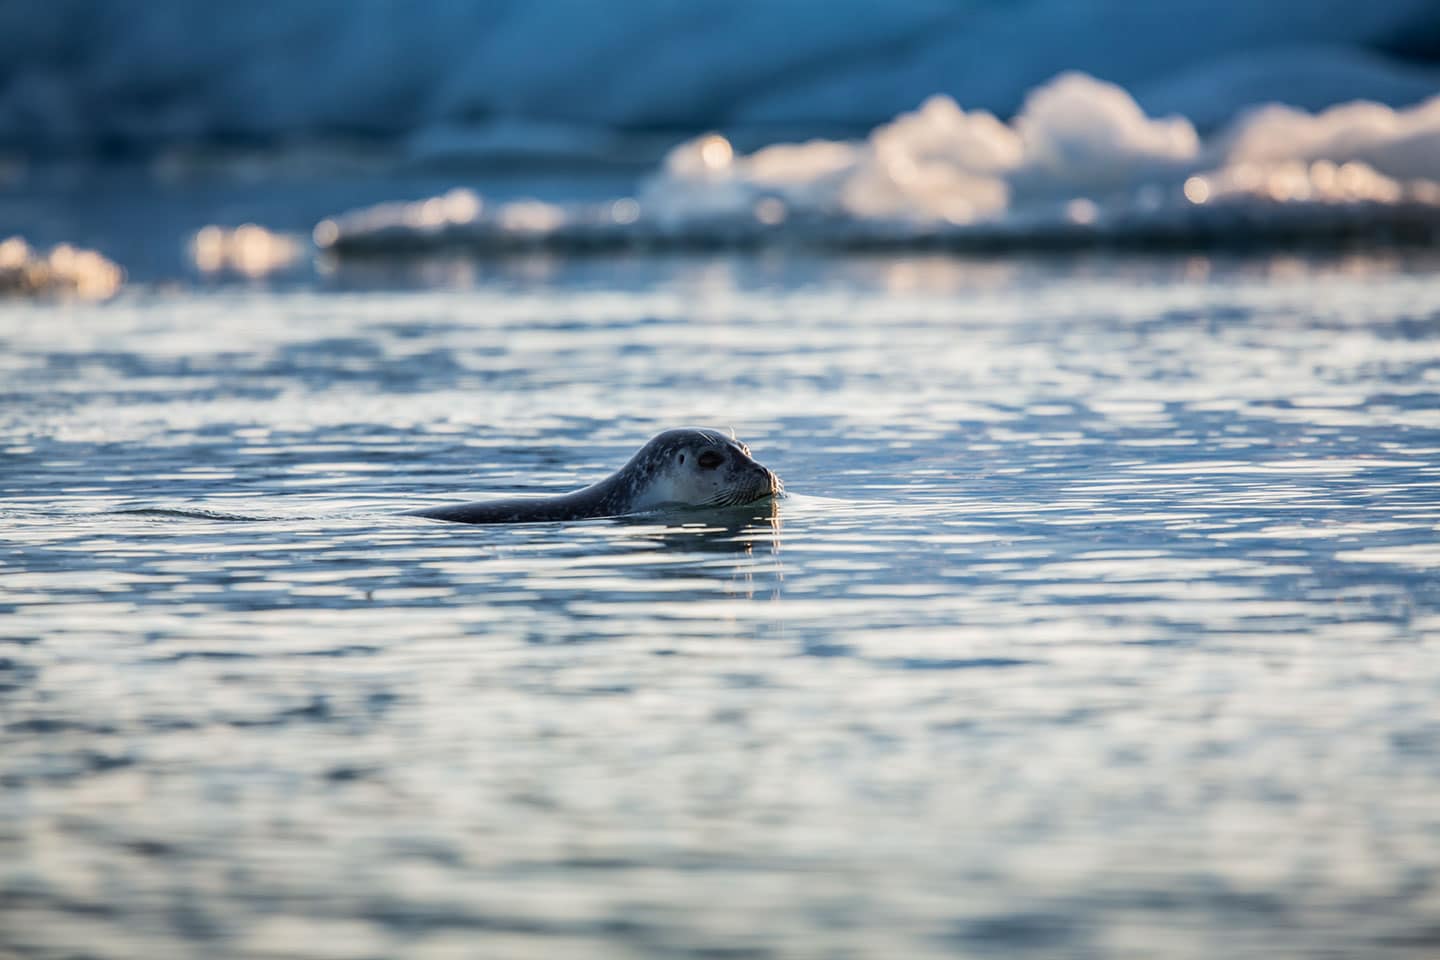 Seal in the Jökulsárlón lagoon of Iceland